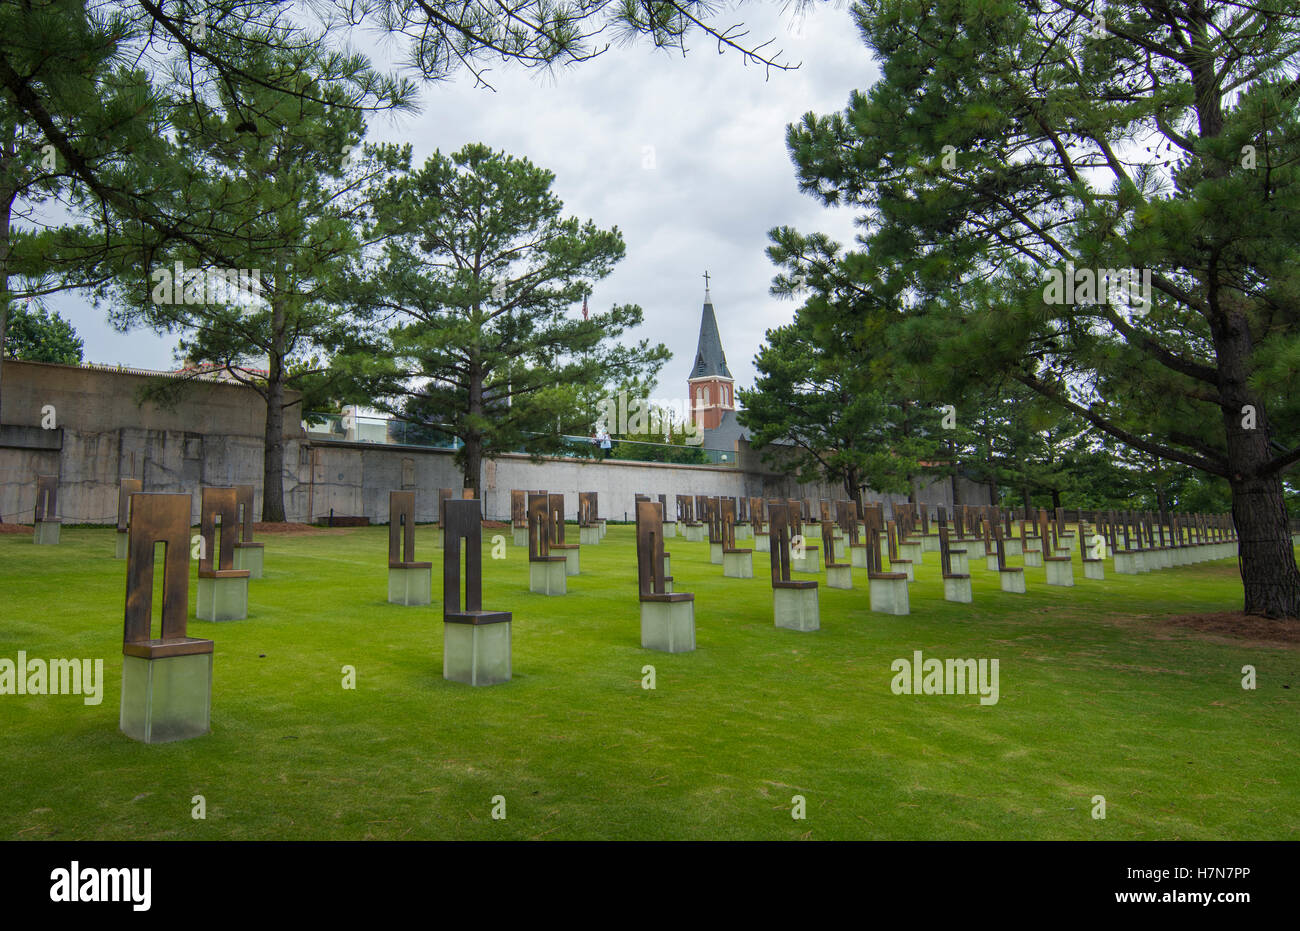 Oklahoma City Oklahoma OK, OKC, historische Katastrophe OKC bombing bleibt bei OKC Bombing-Denkmal, das am 19. April 1995 geschah Stockfoto